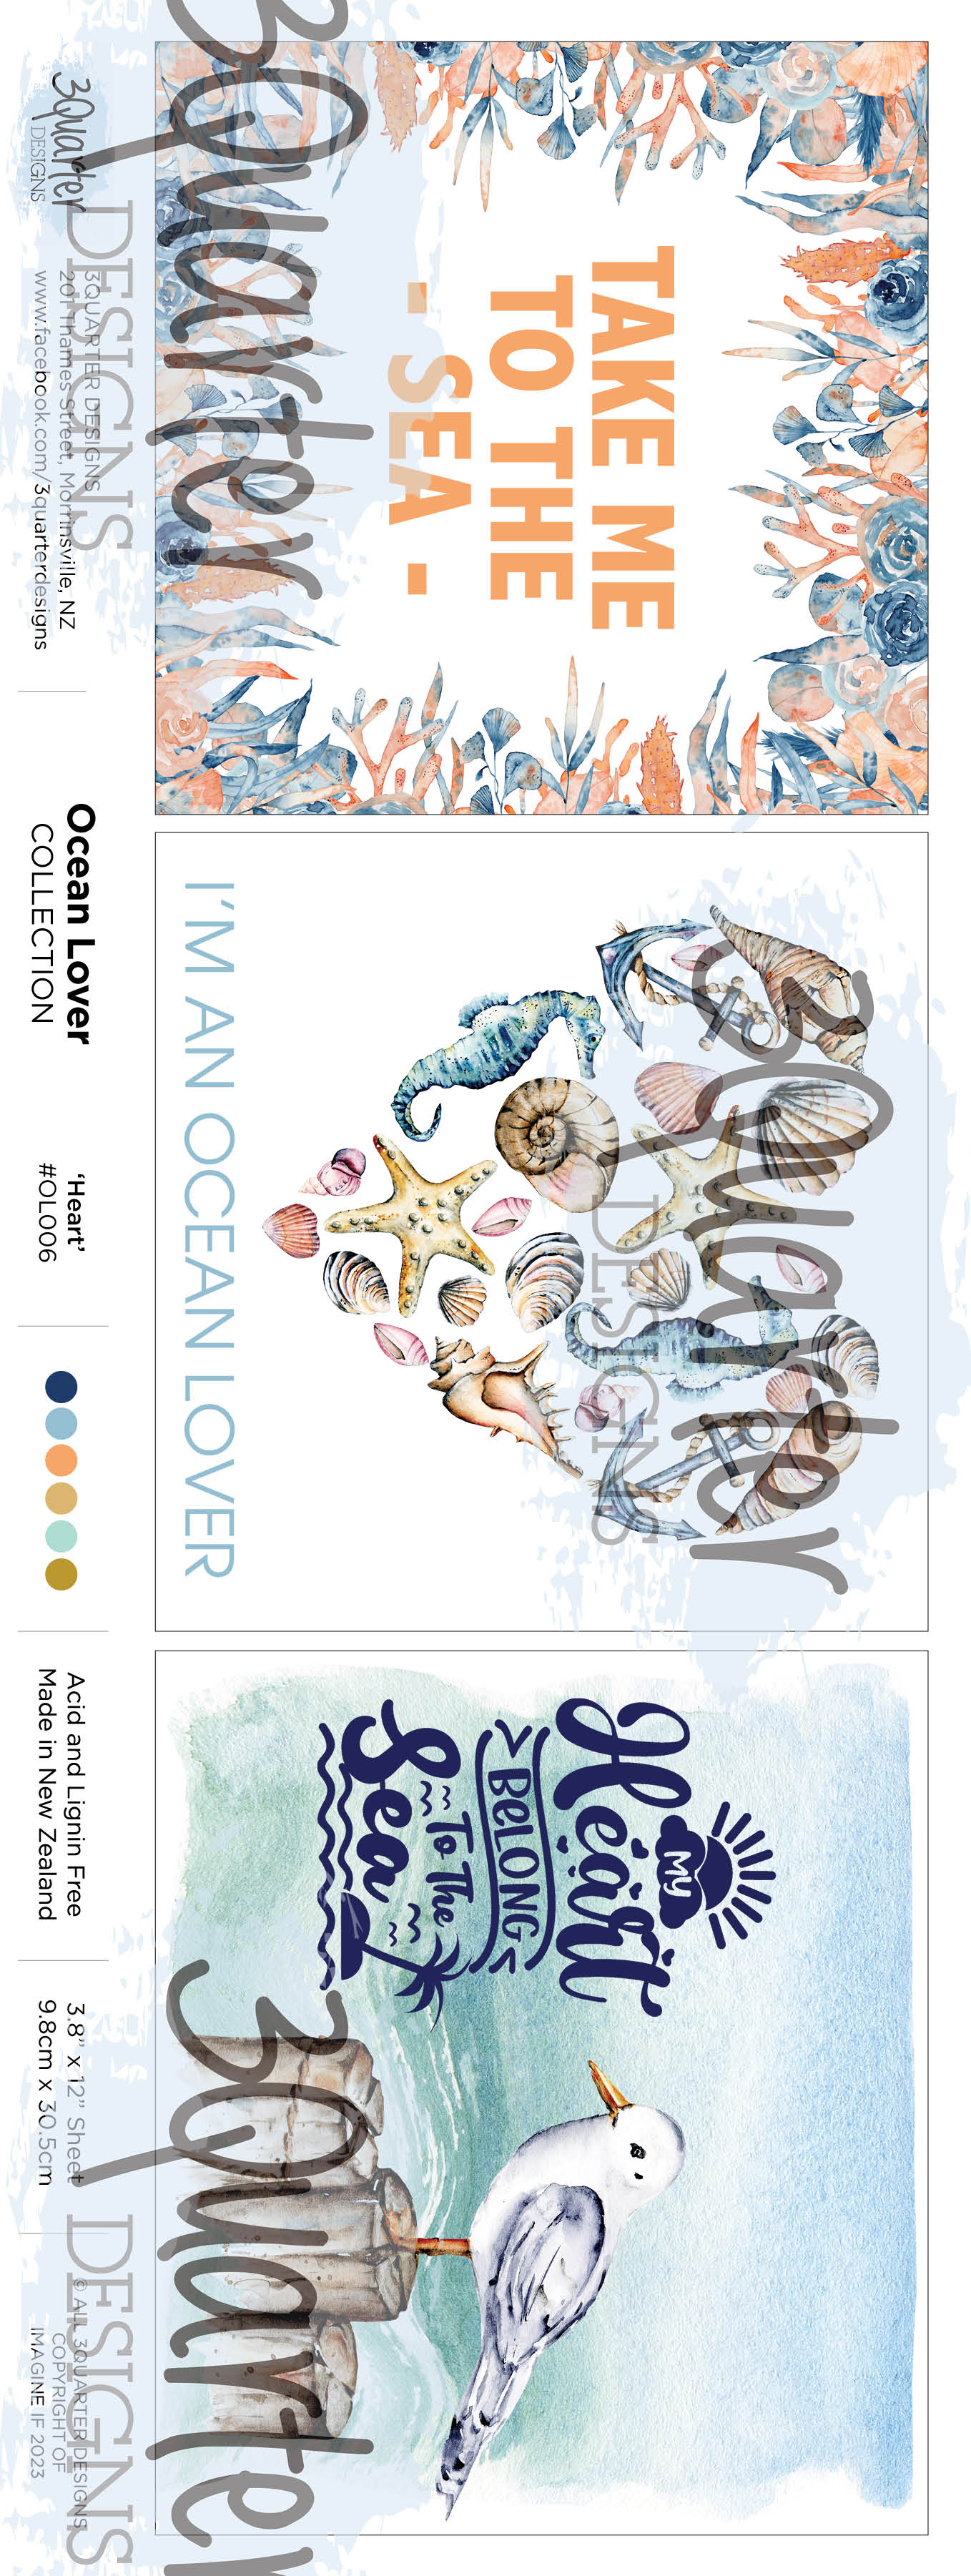 3Quarter Designs - Ocean Lovers - Scrapbook Collection